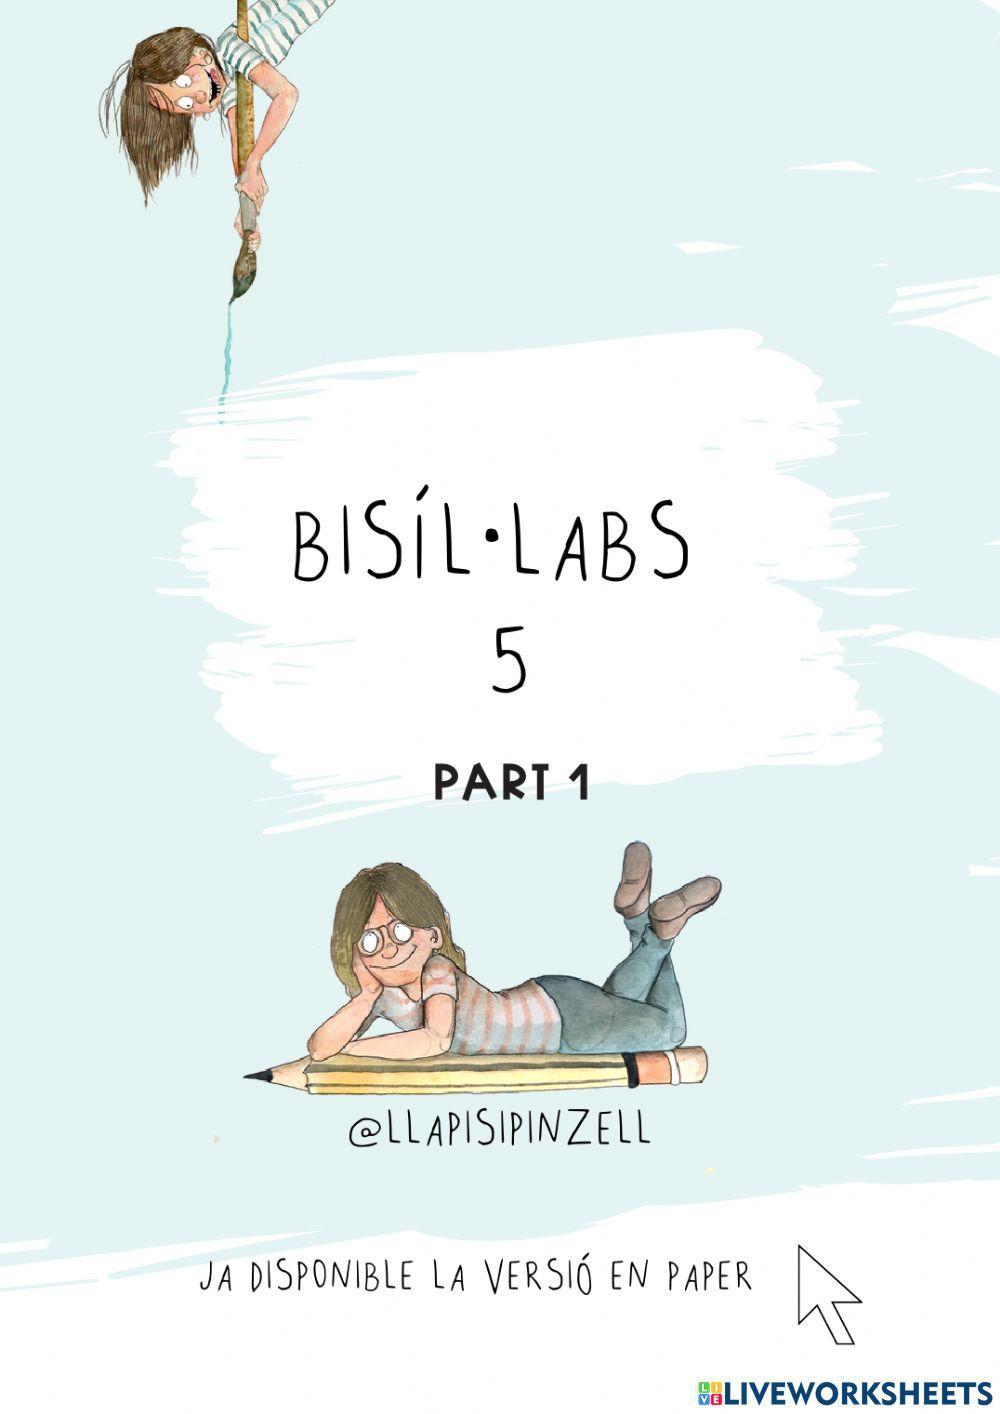 Bisíl·labs 5 part 1